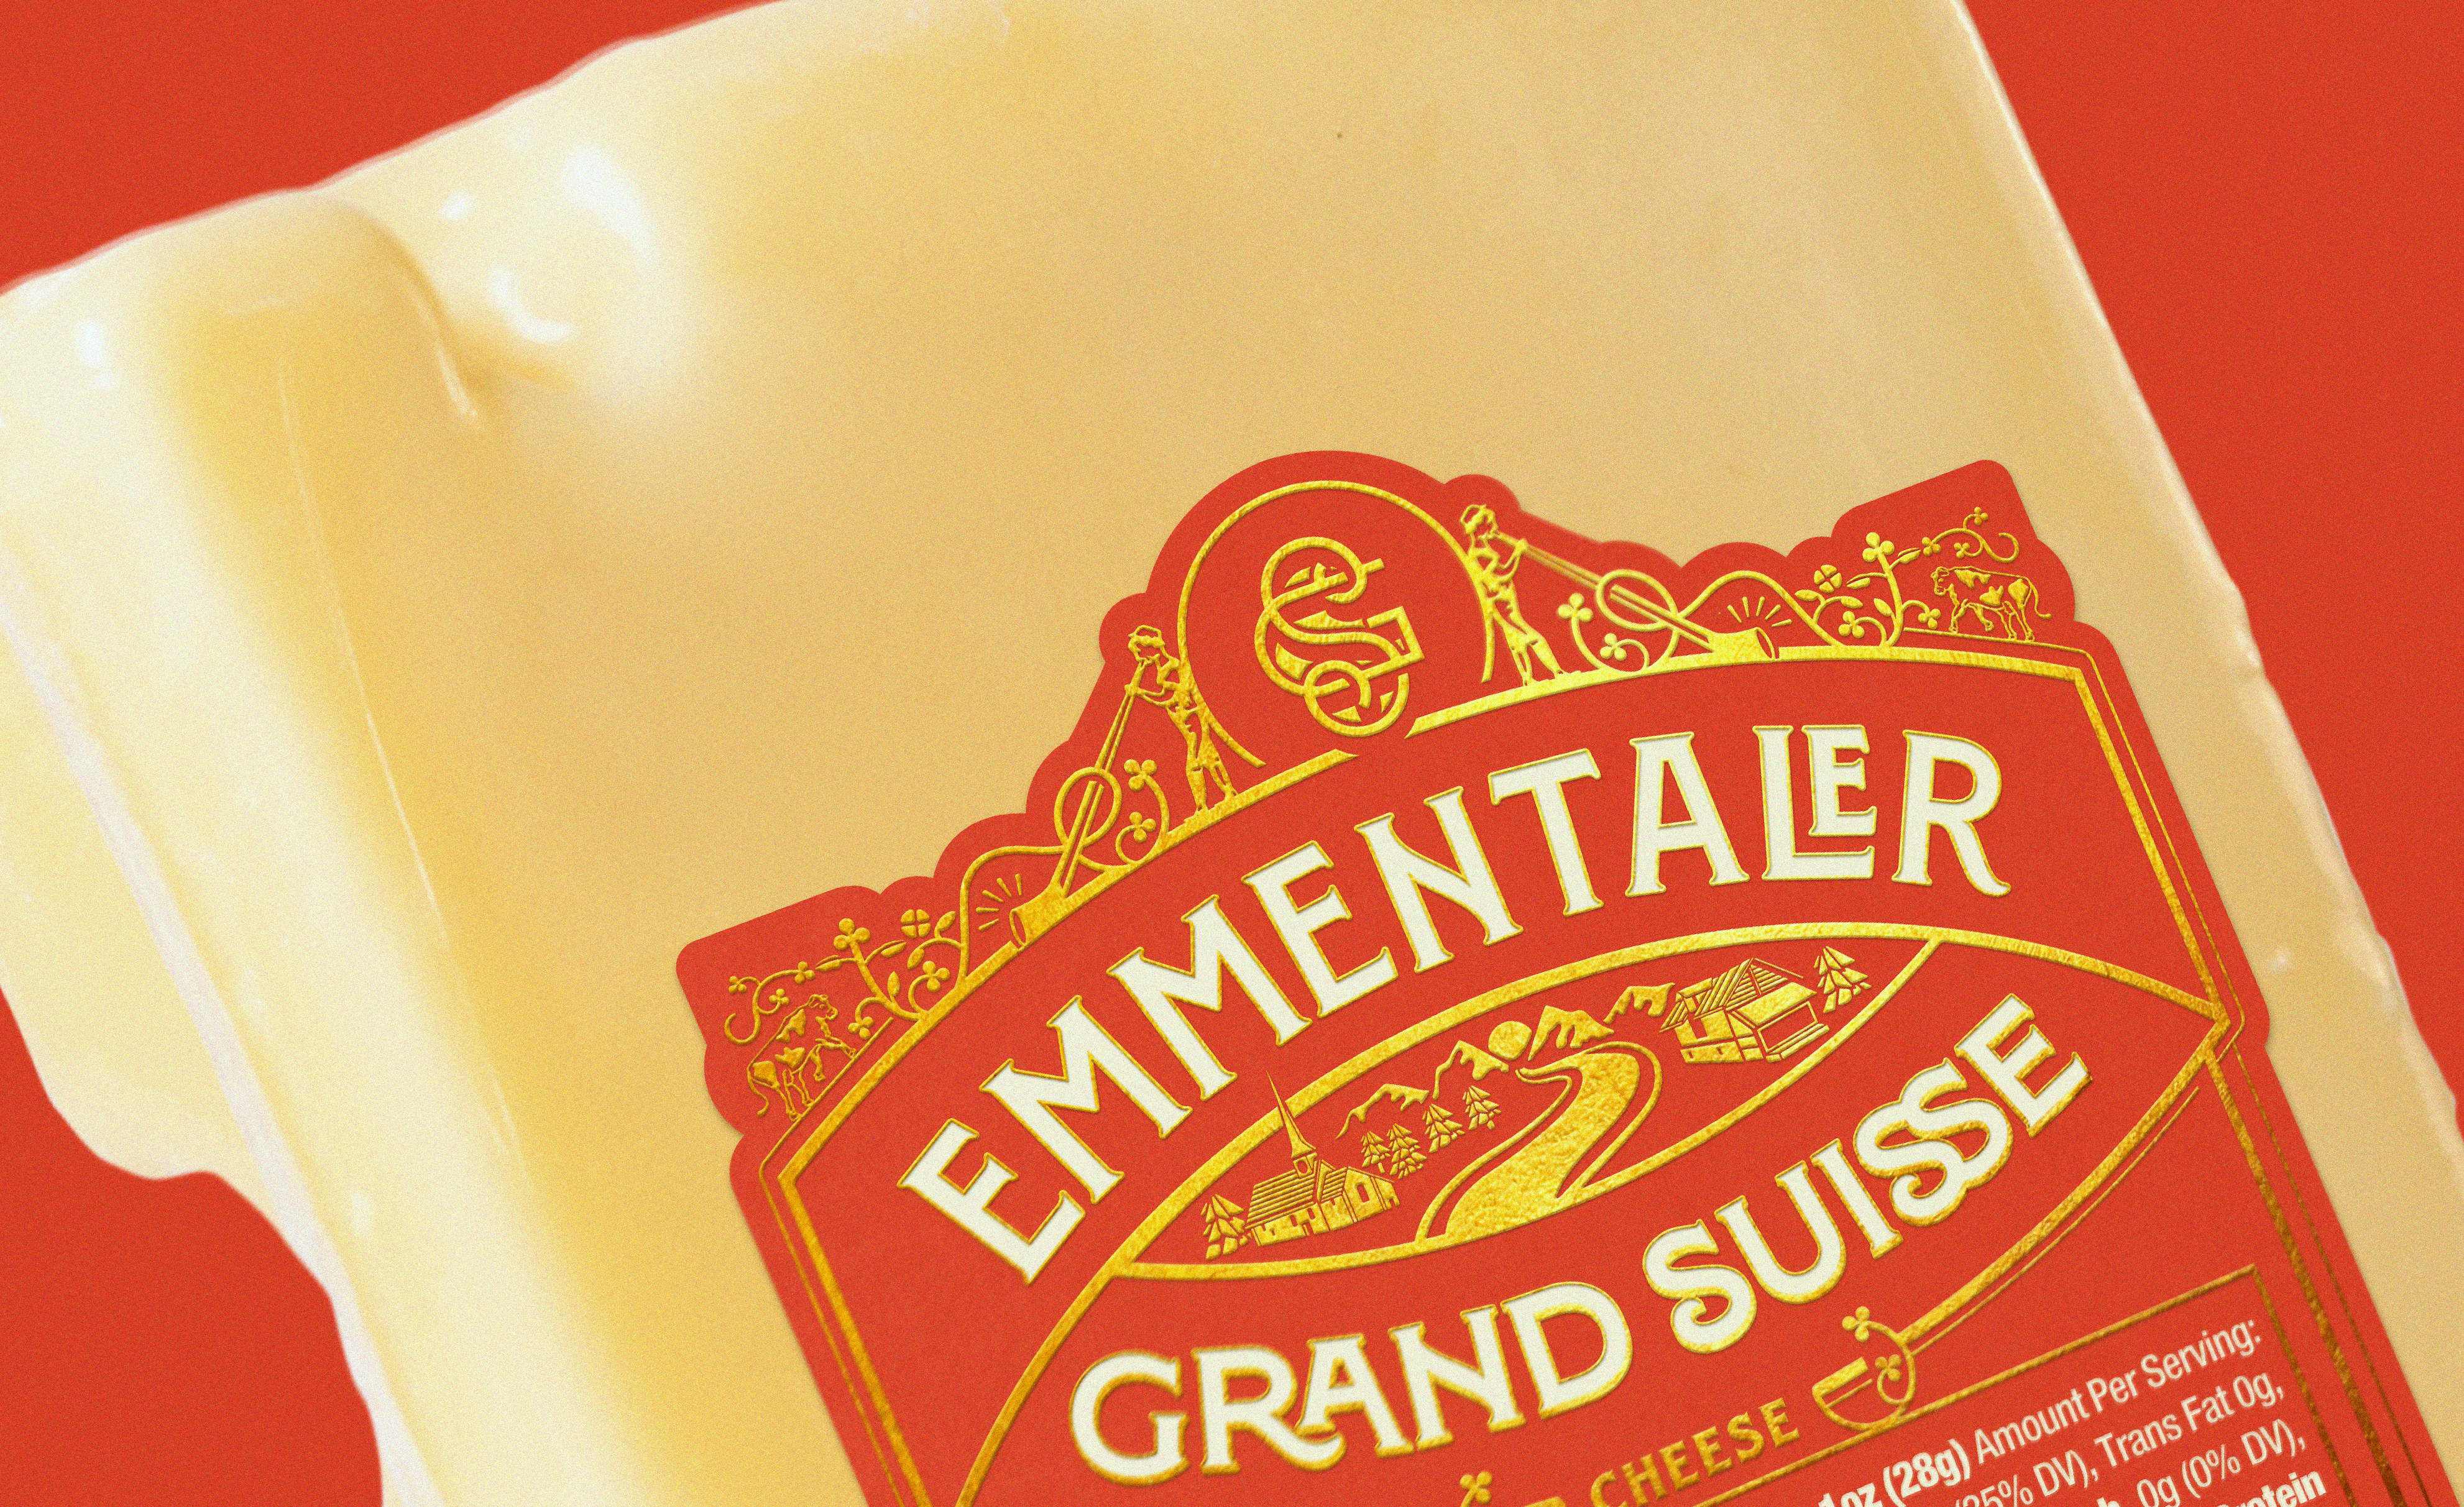 label-cheese-emmentaler-preview-grand-suisse-close-zeki-michael-design-branding-studio-packaging-red